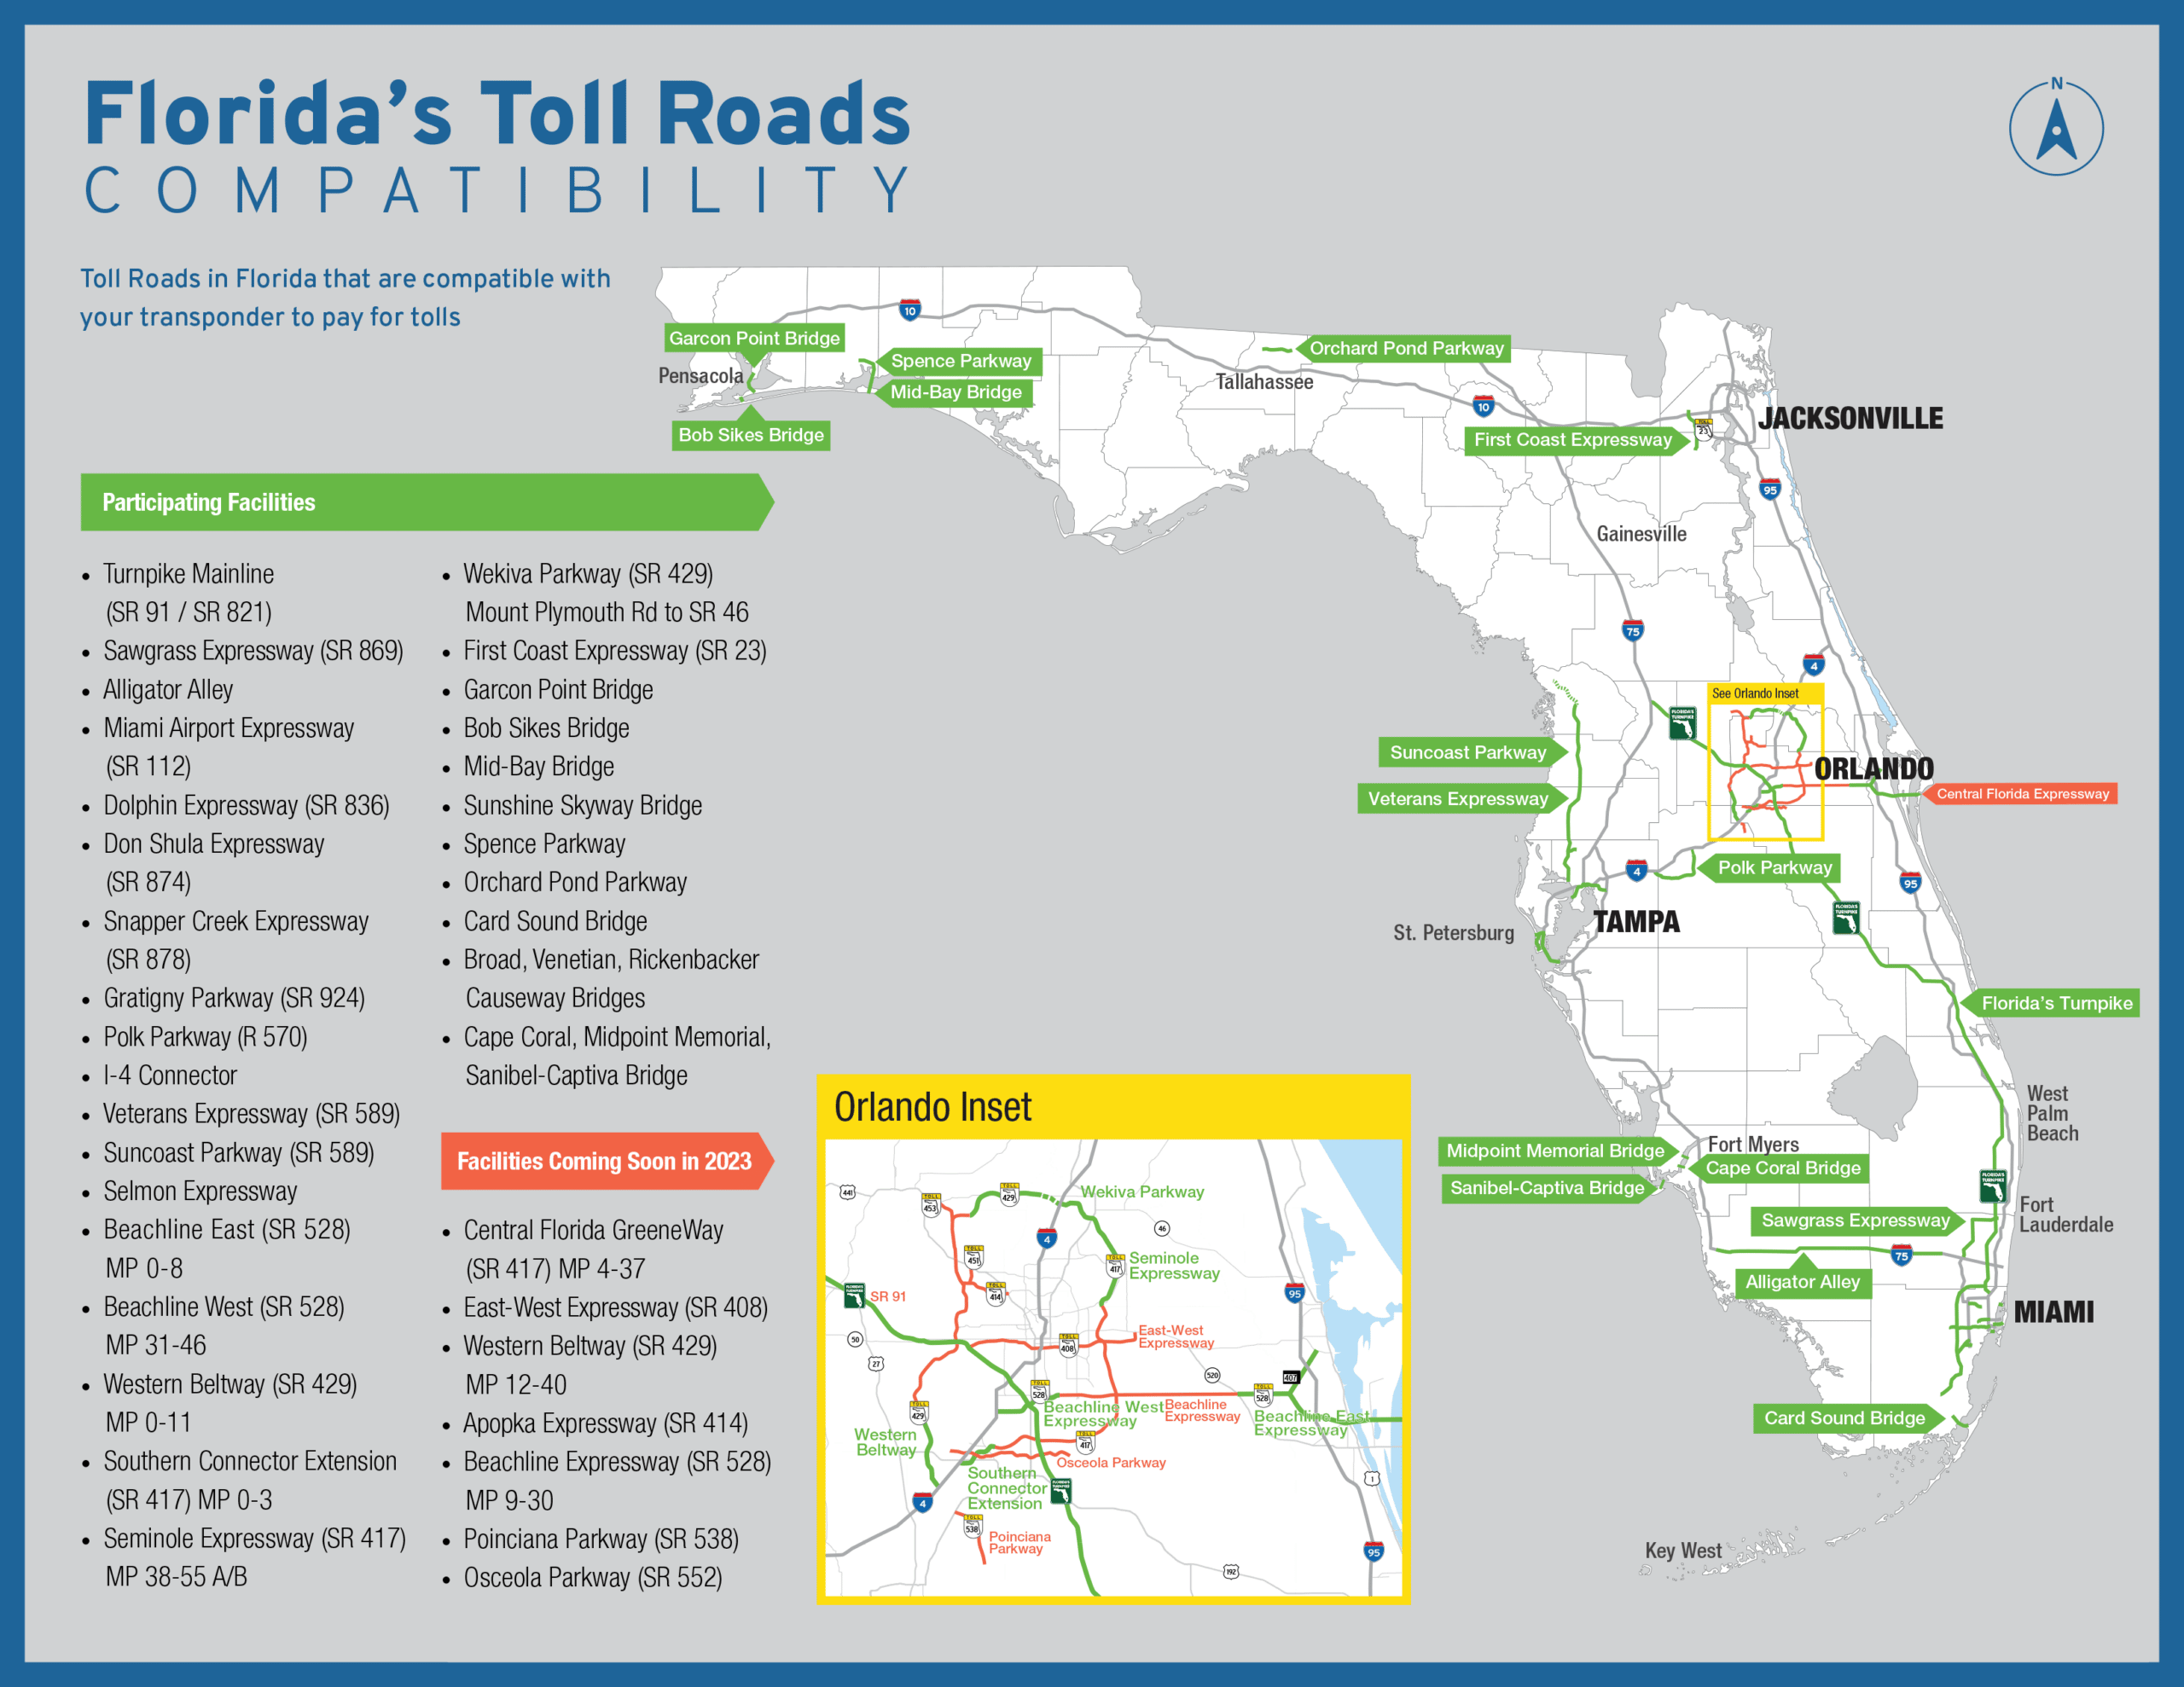 Toll Roads in Florida - Tampa Hillsborough Expressway Authority